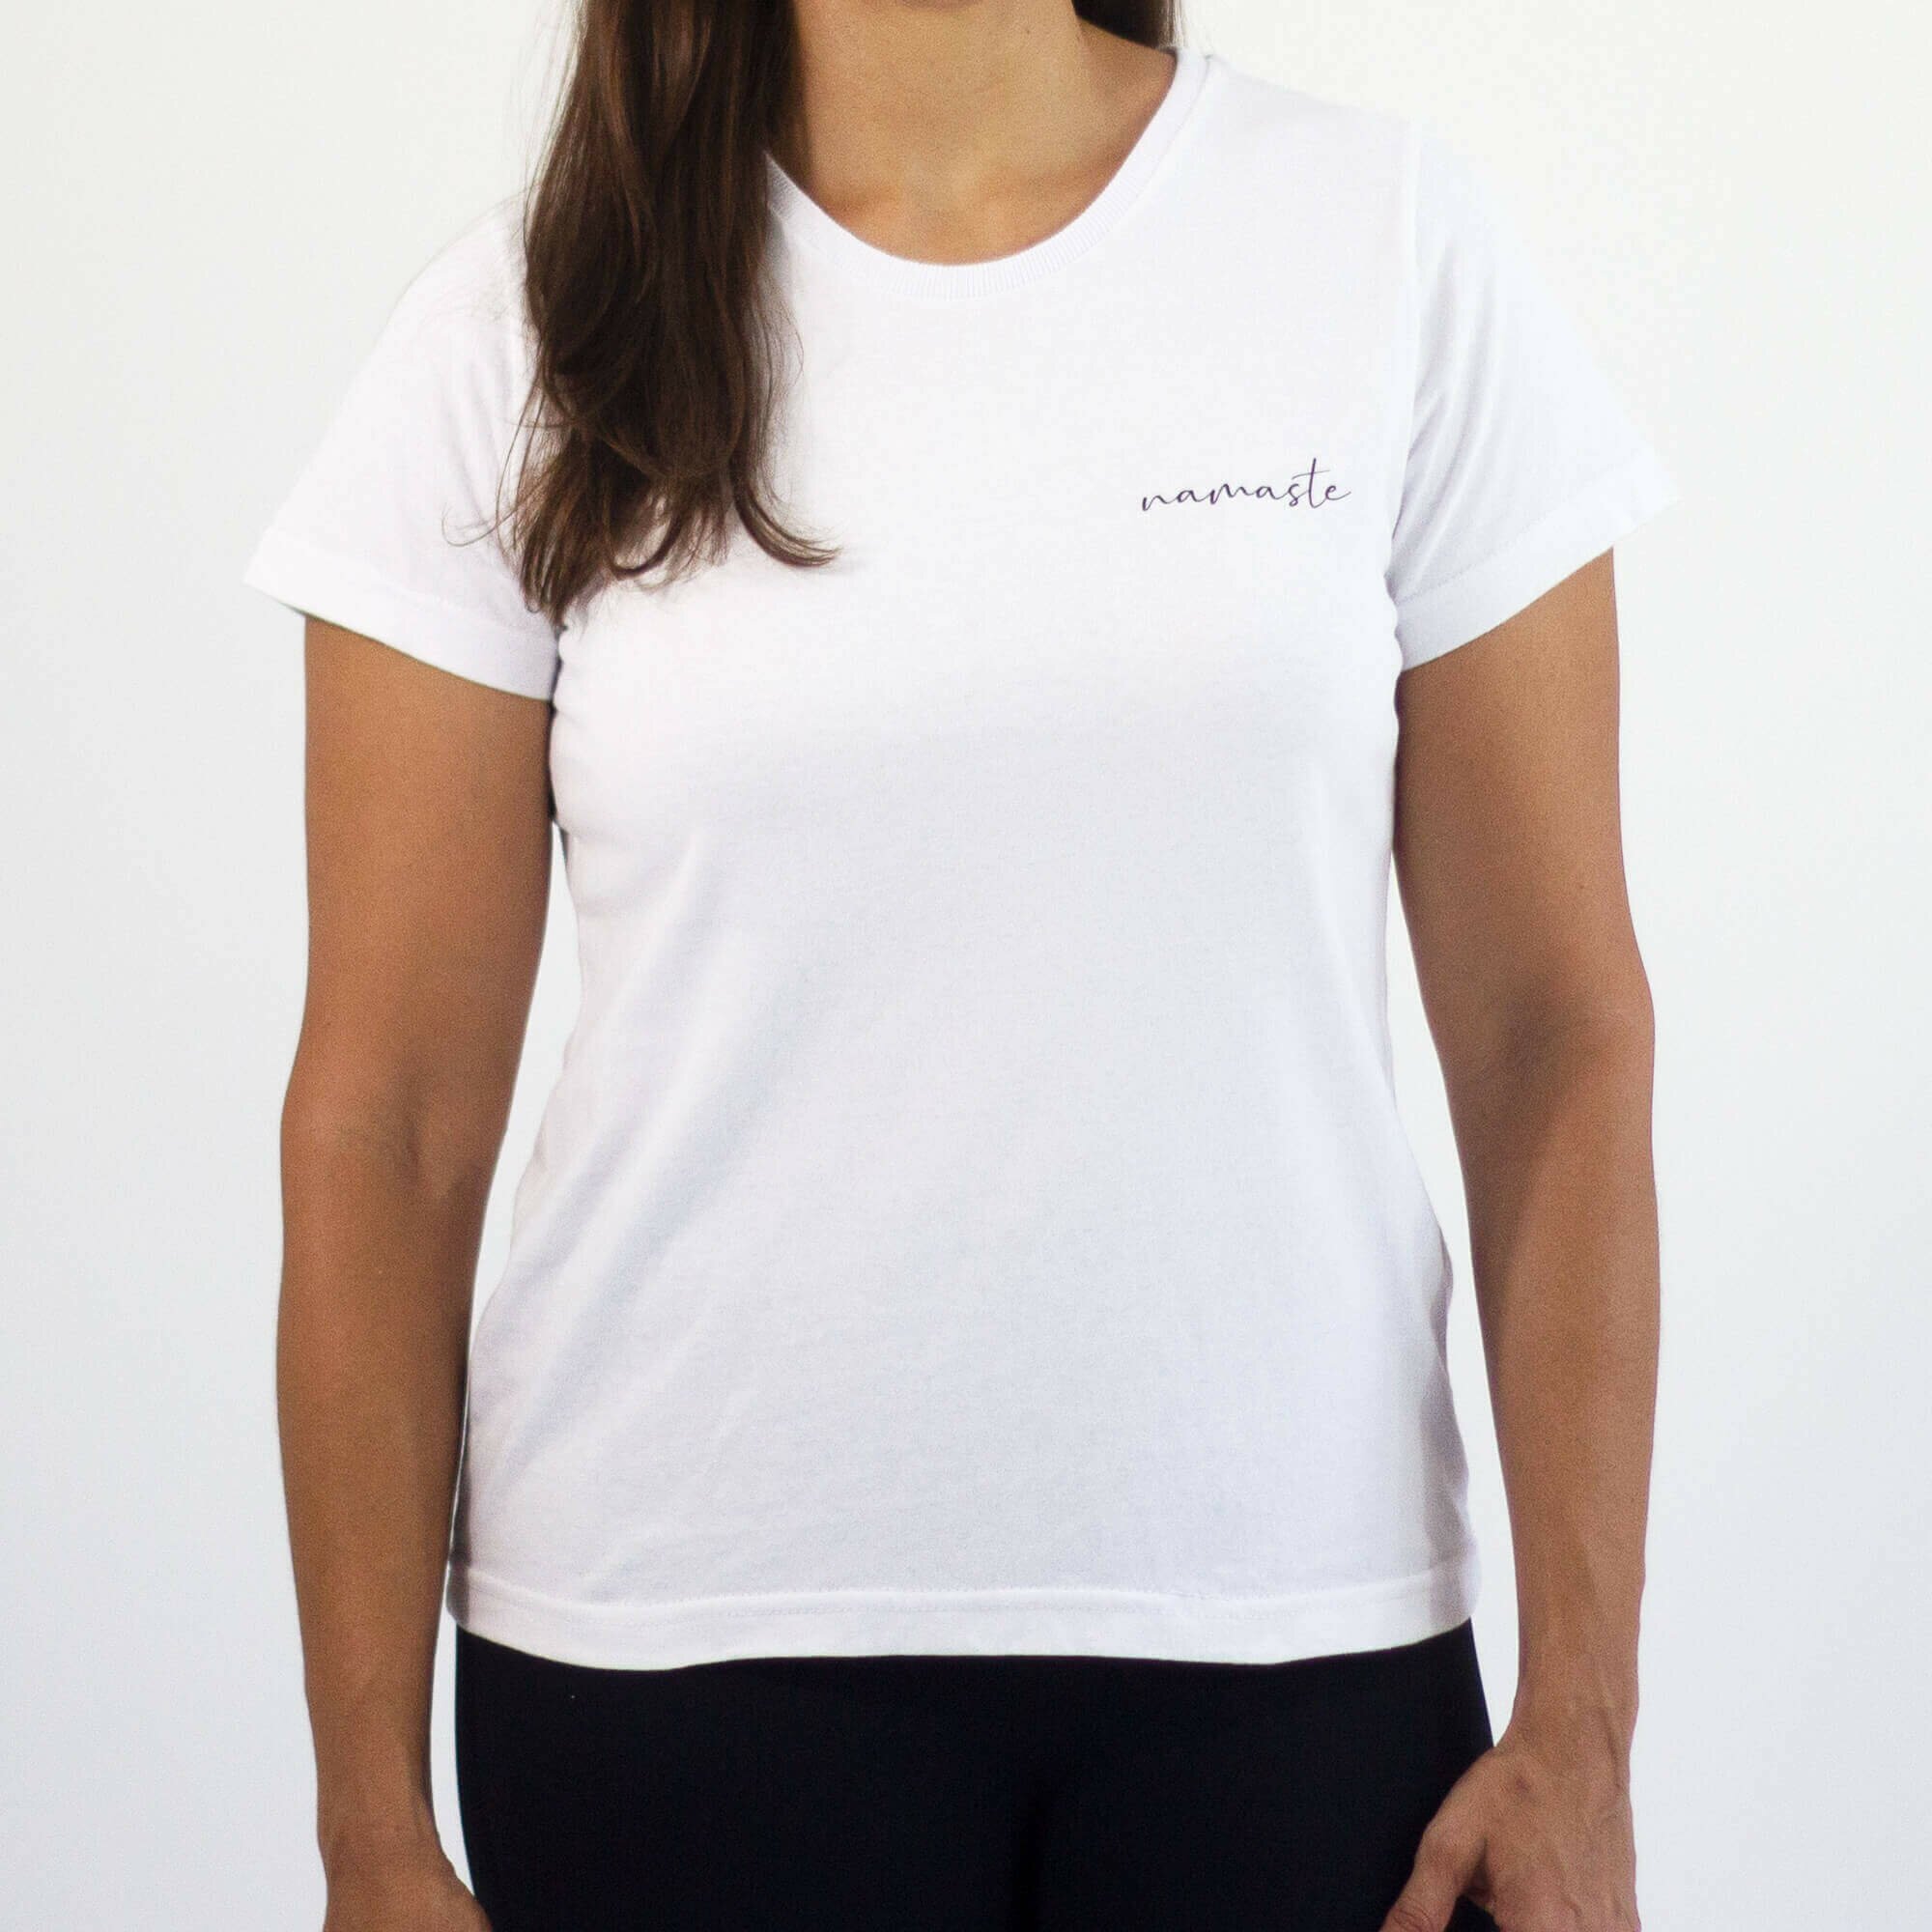 Camiseta para Yoga l Namaste Caligrafia l Yogateria